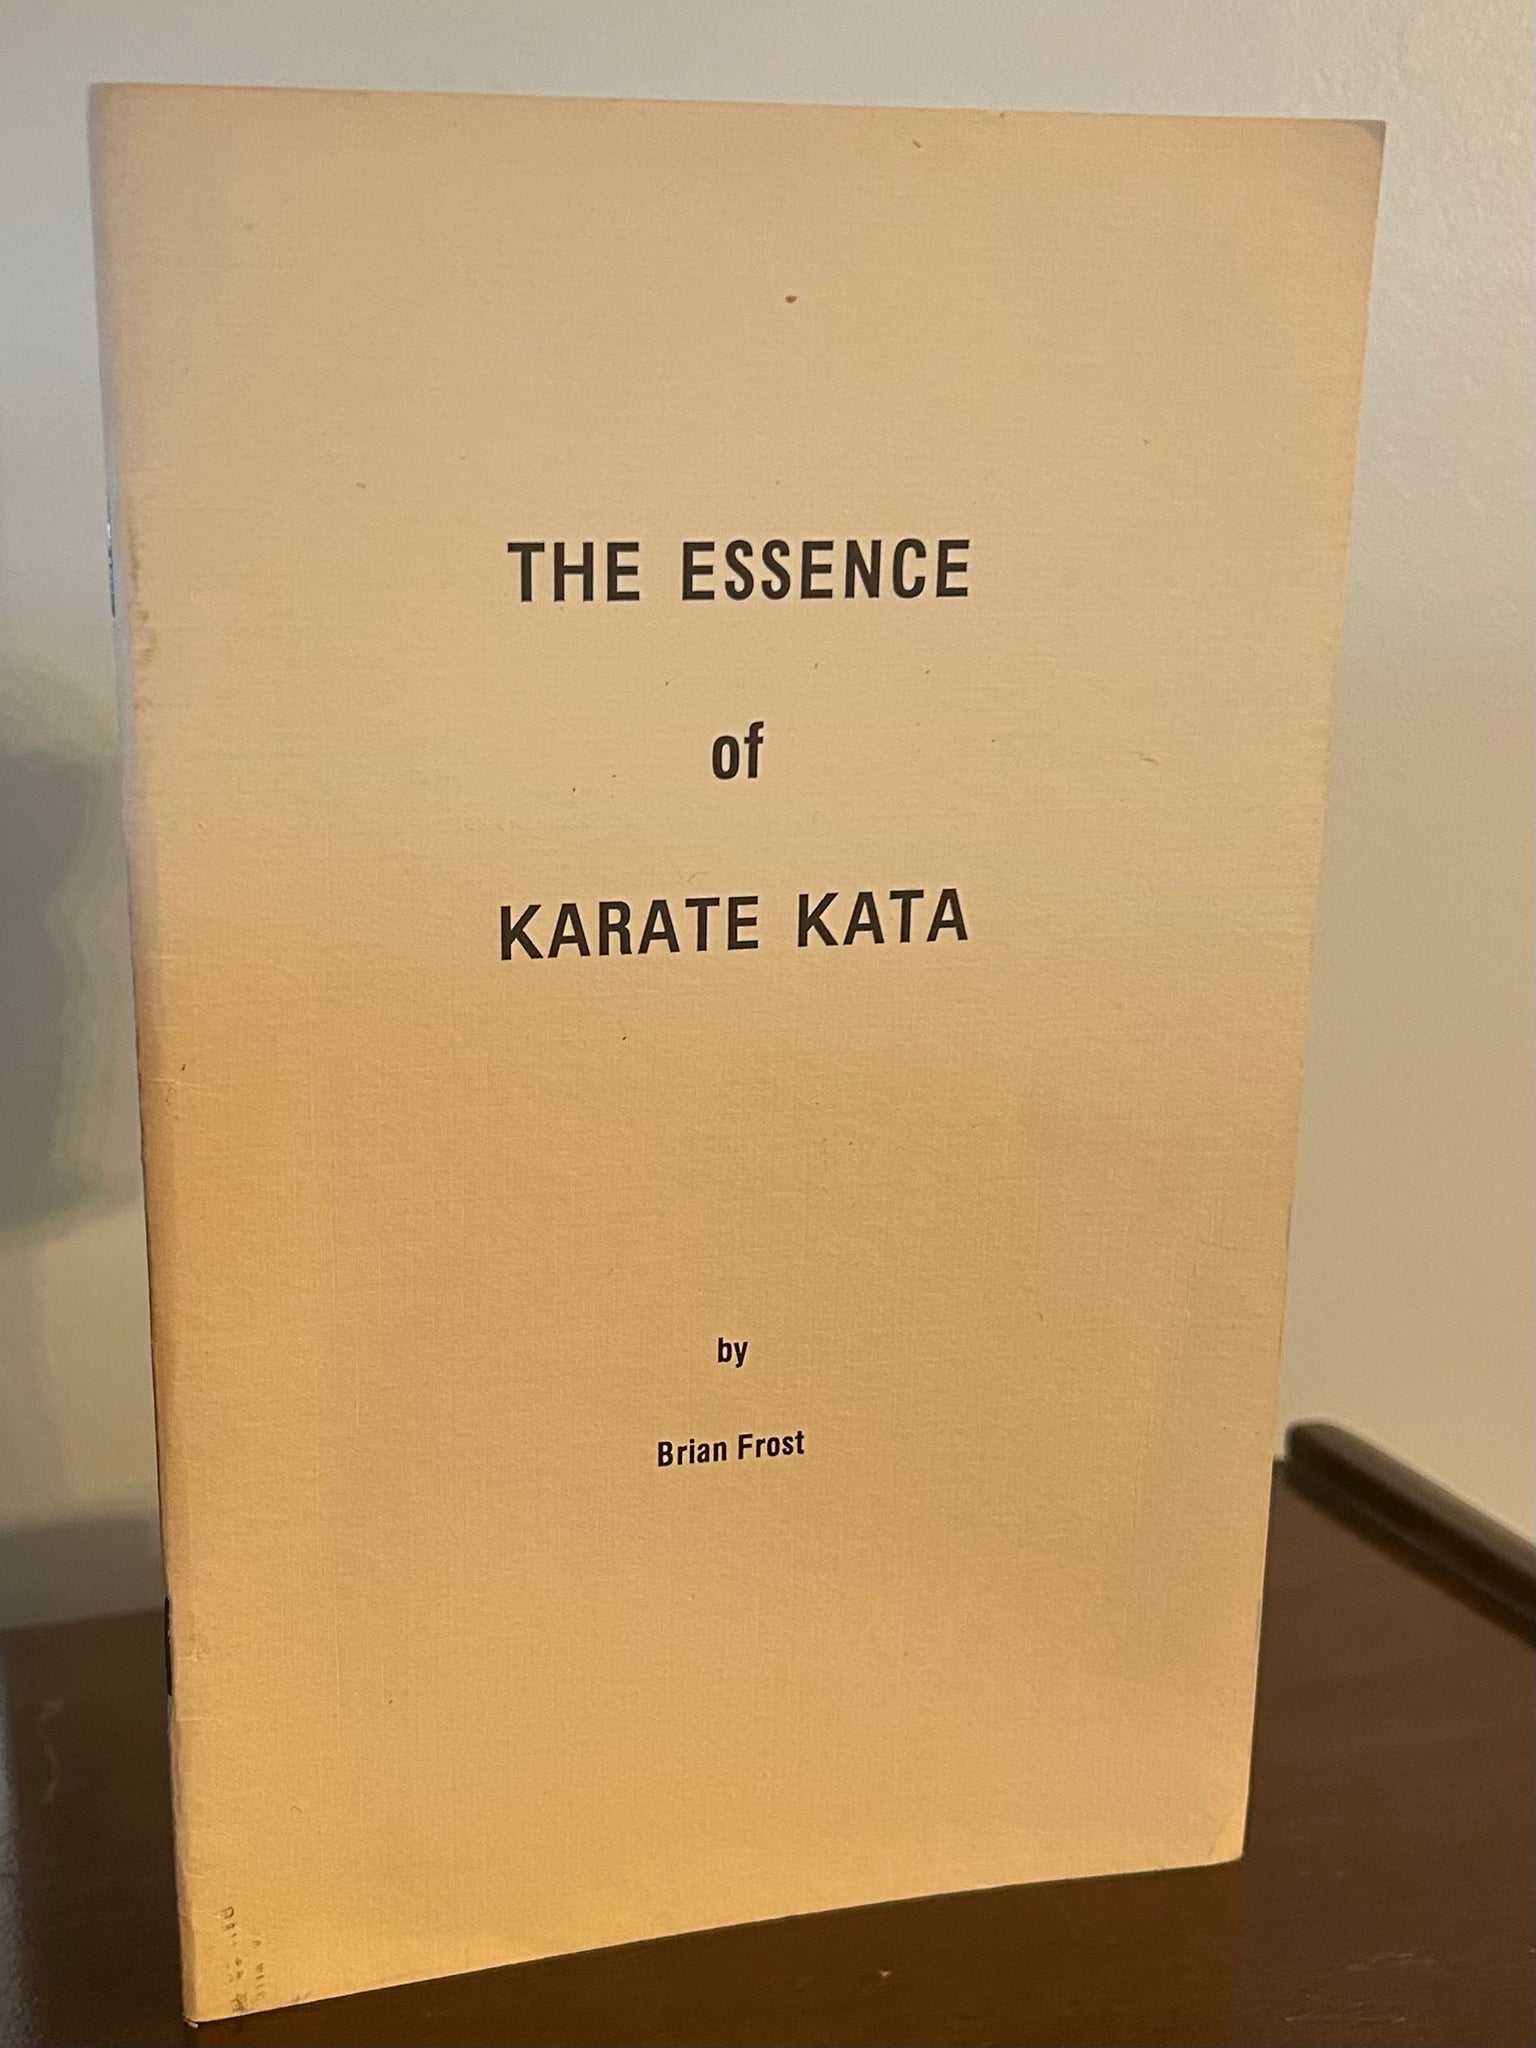 THE Essence of Karate Kata